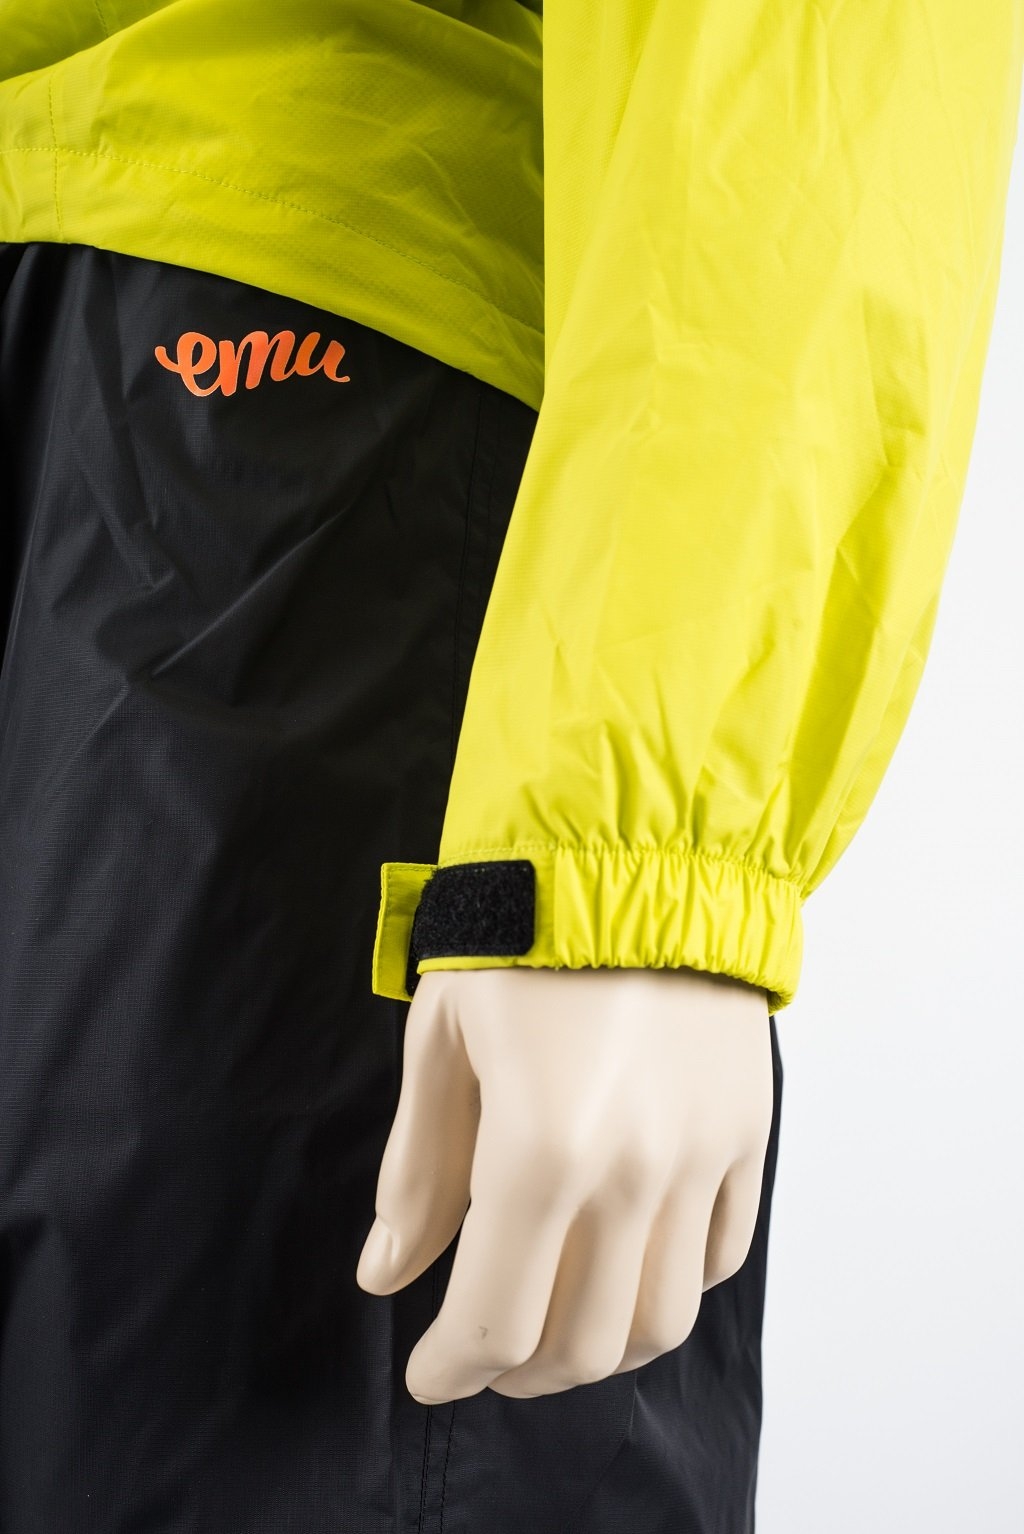 Emu Waterproof Cycling Trousers Black – XL